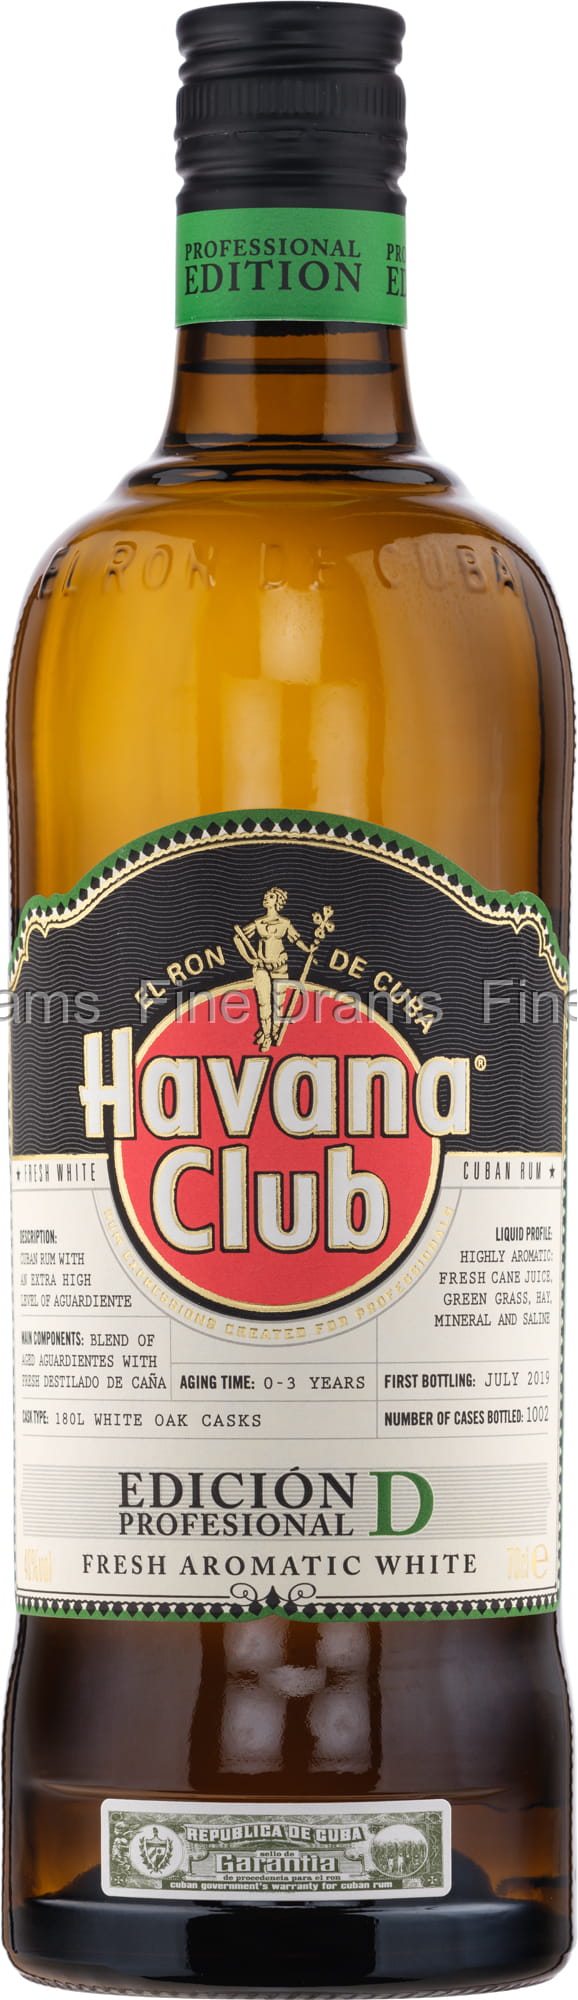 Havana Club Edición Profesional D Rum